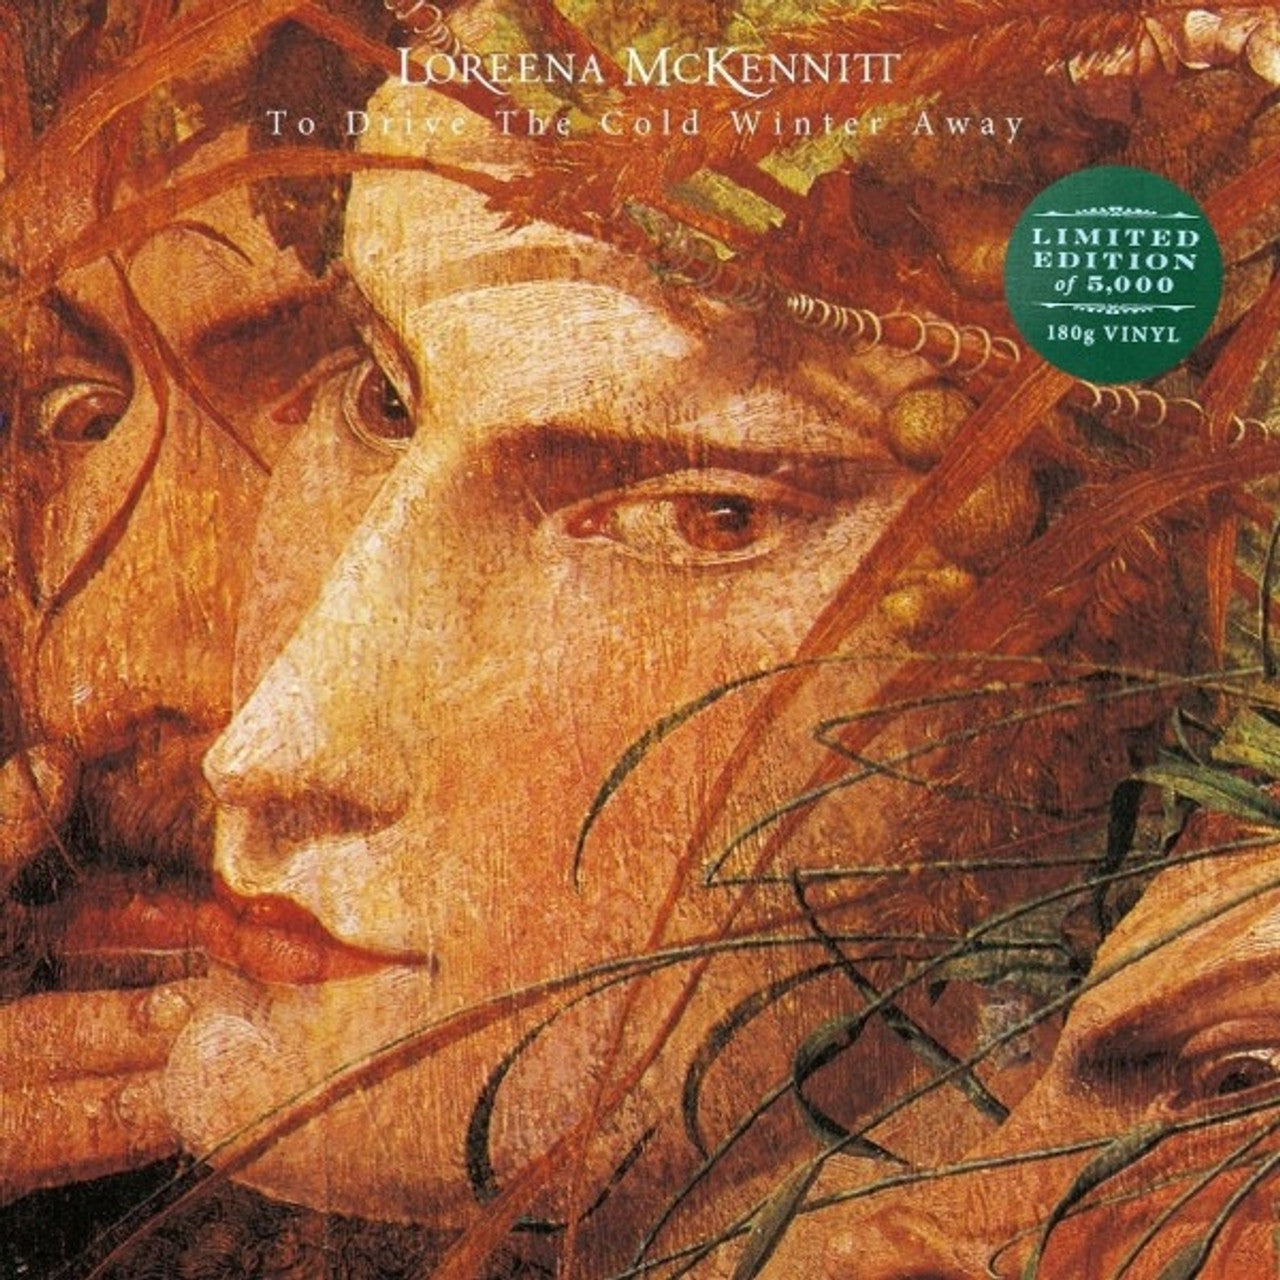 Loreena McKennitt - To Drive the Cold Winter Away (Vinyl LP)